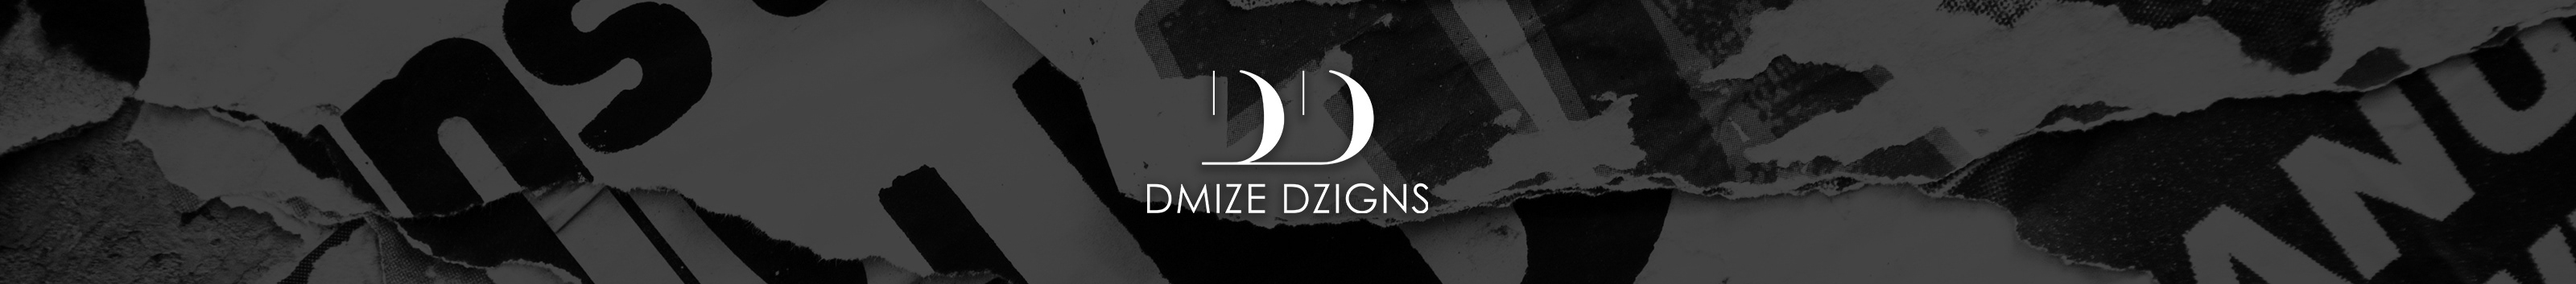 Banner de perfil de DEVIN MIZE